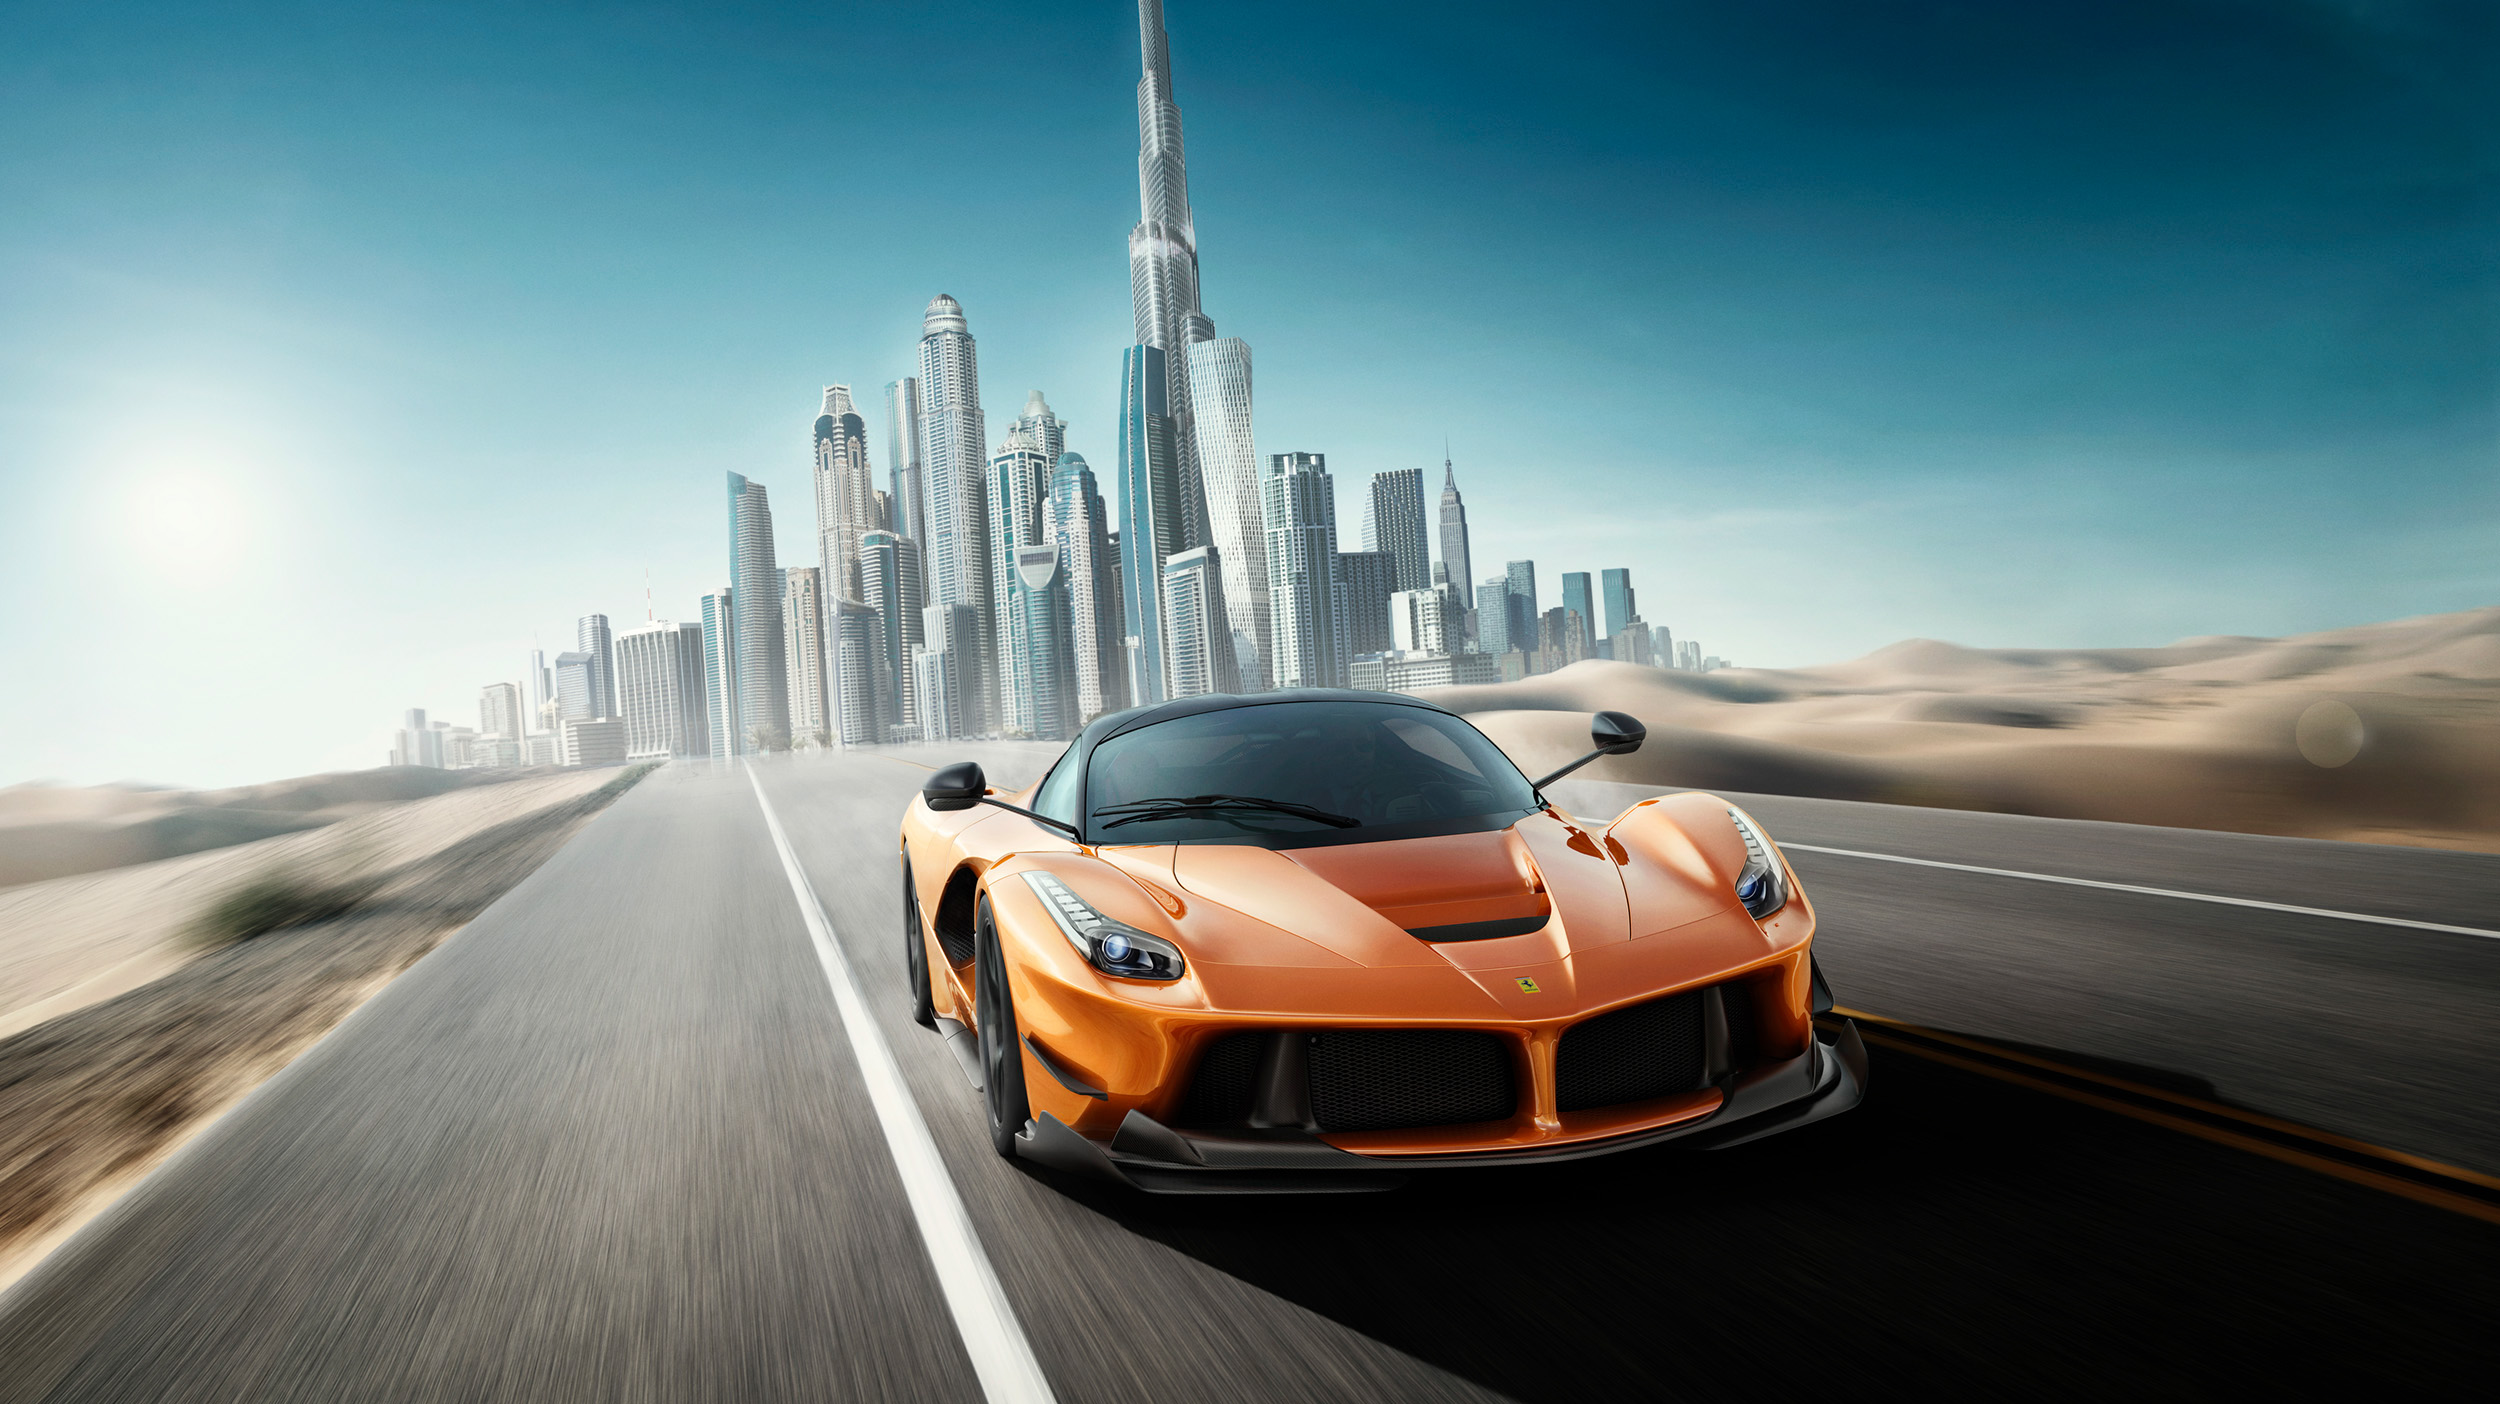 Ferrari In Dubai, HD Cars, 4k Wallpaper, Image, Background, Photo and Picture